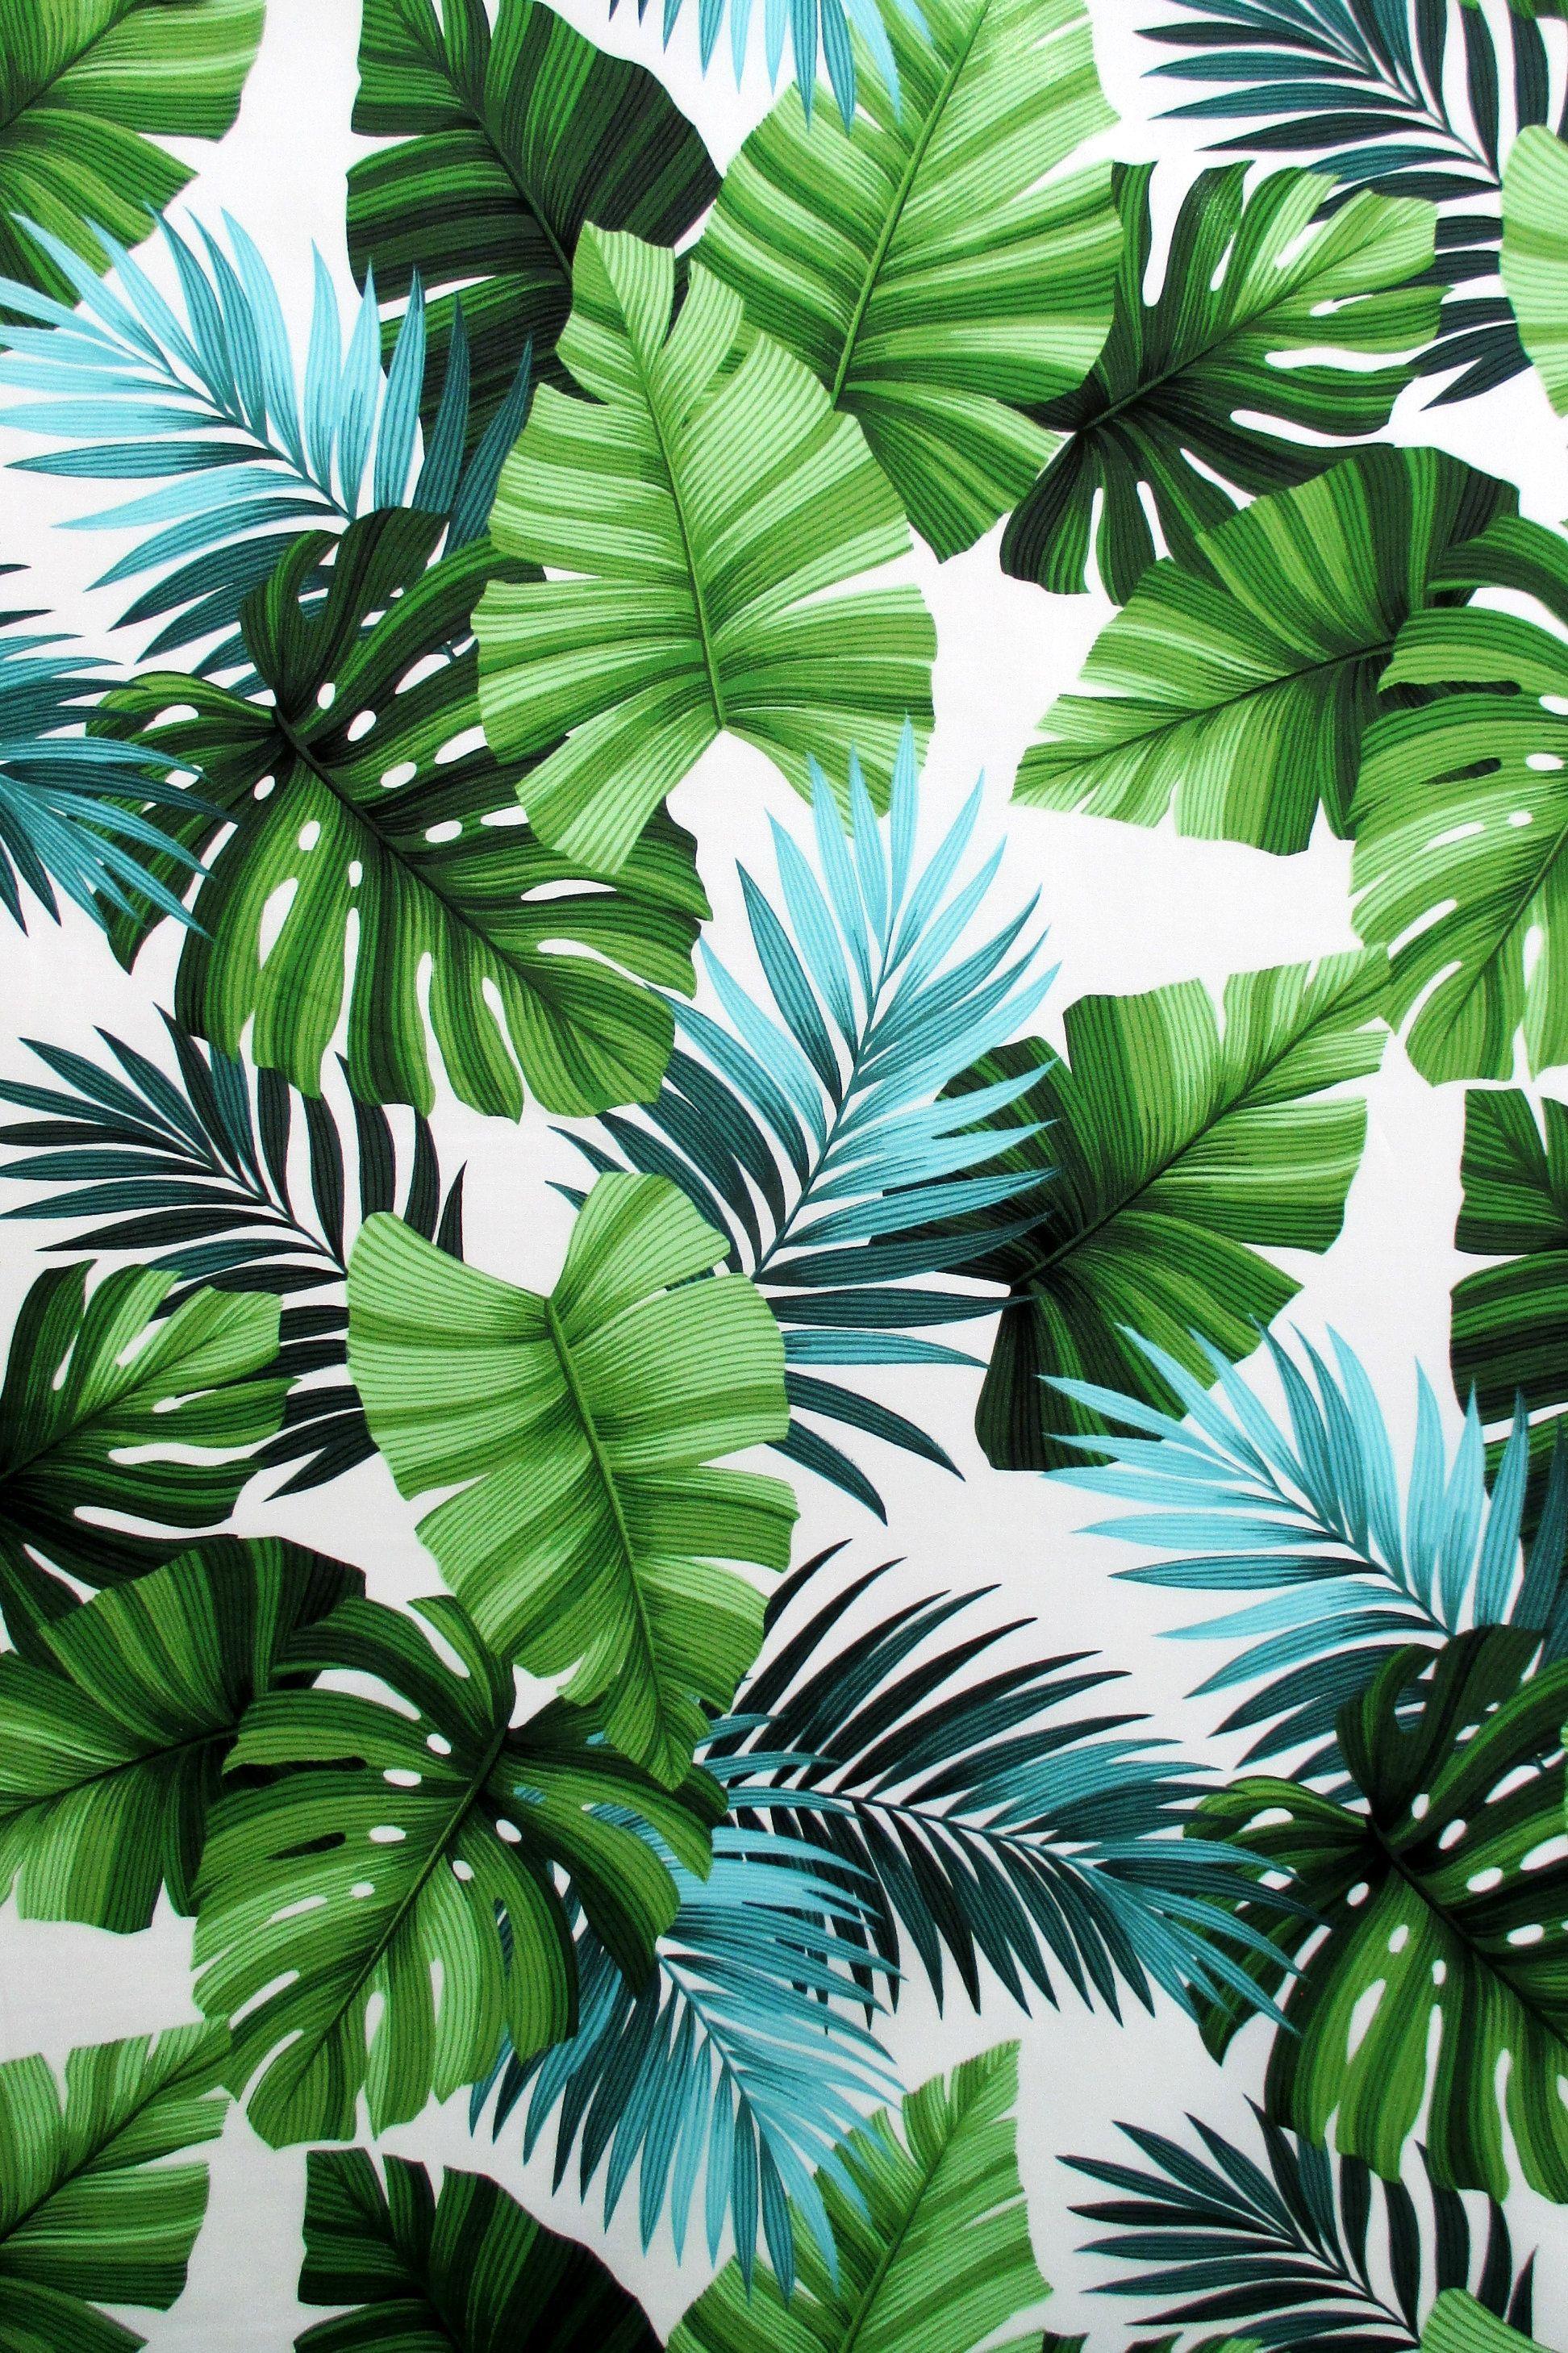 Coconut Leaf Wallpapers - Top Free Coconut Leaf Backgrounds